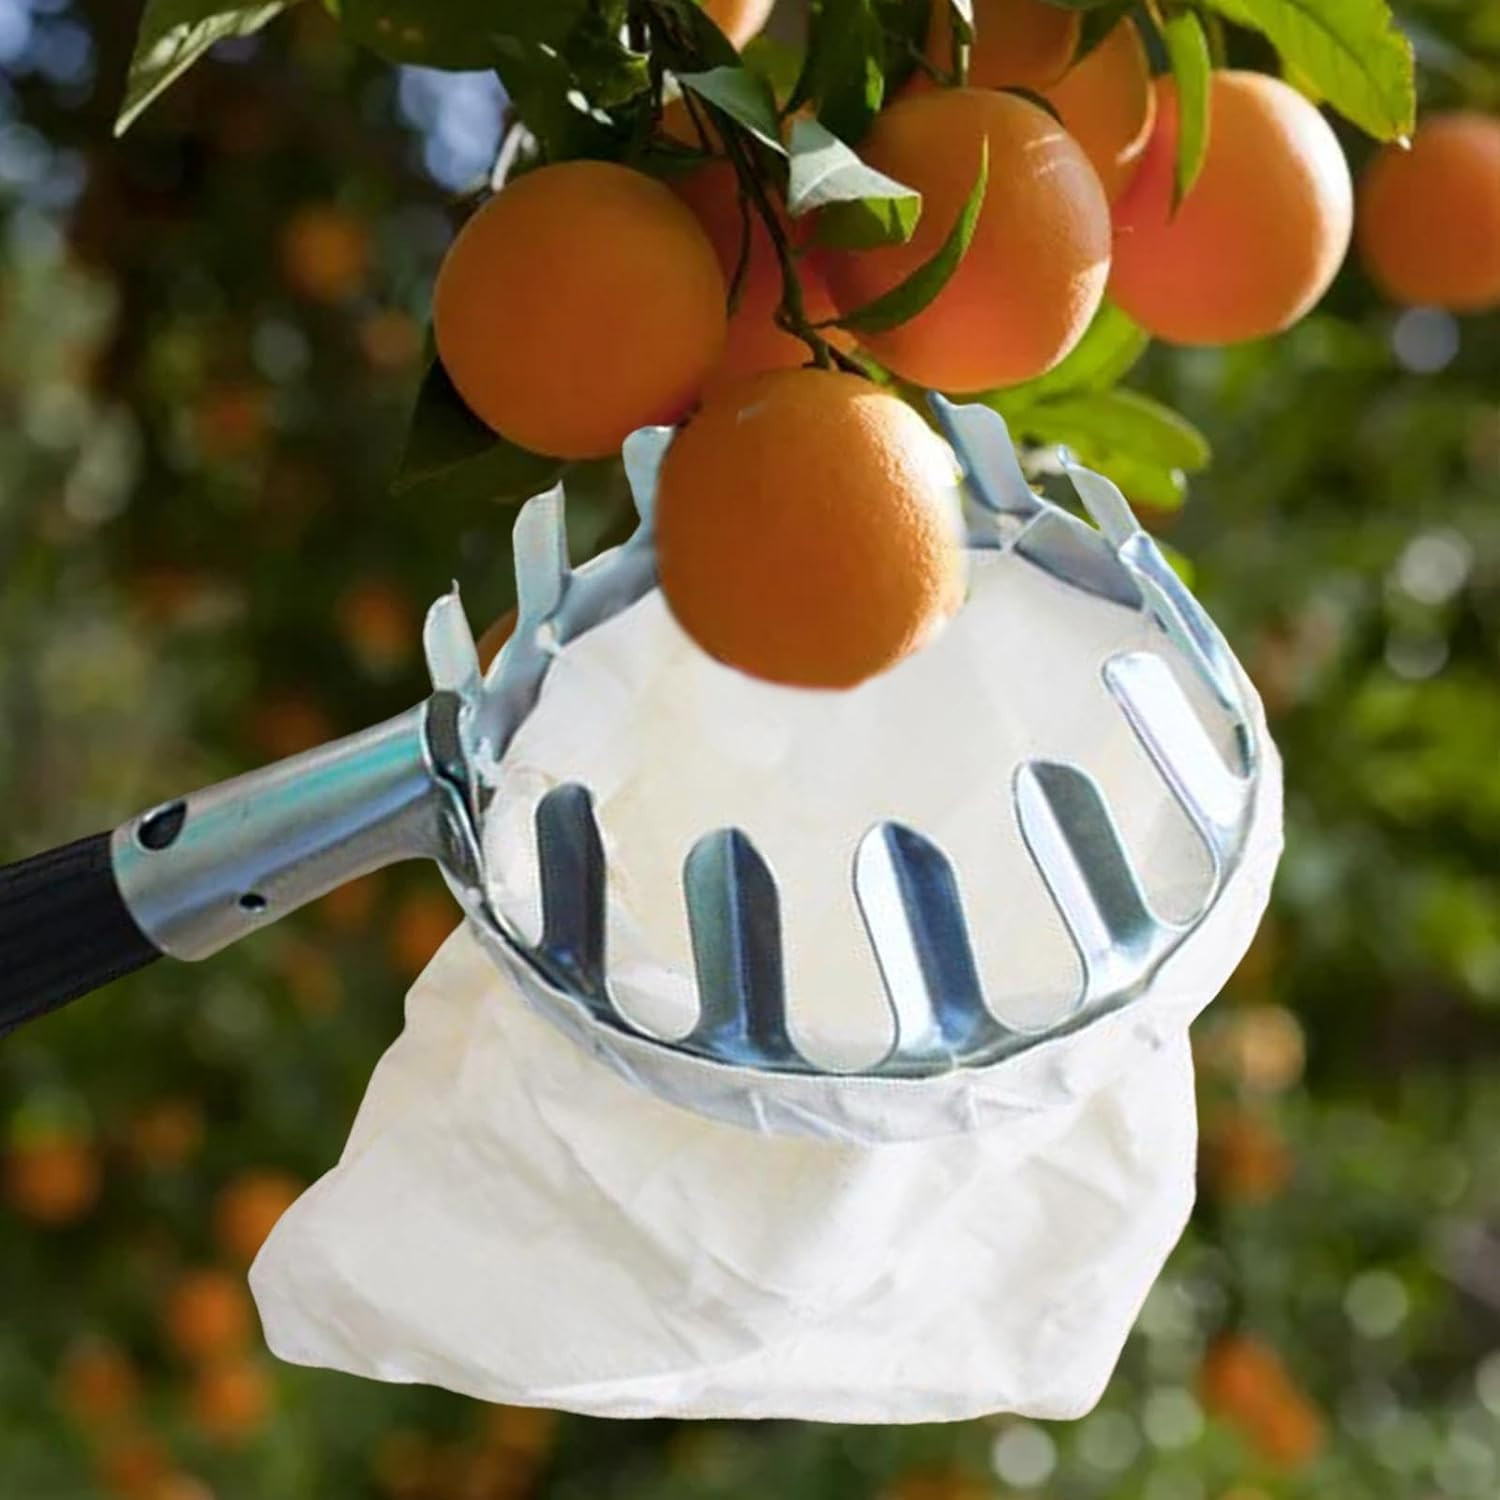 Kuber Industries Fruit Picker With Cotton Bag|Fruit, Mango, Coconut Plucker|Fruit Picking Tool, Basket For Garden (White)